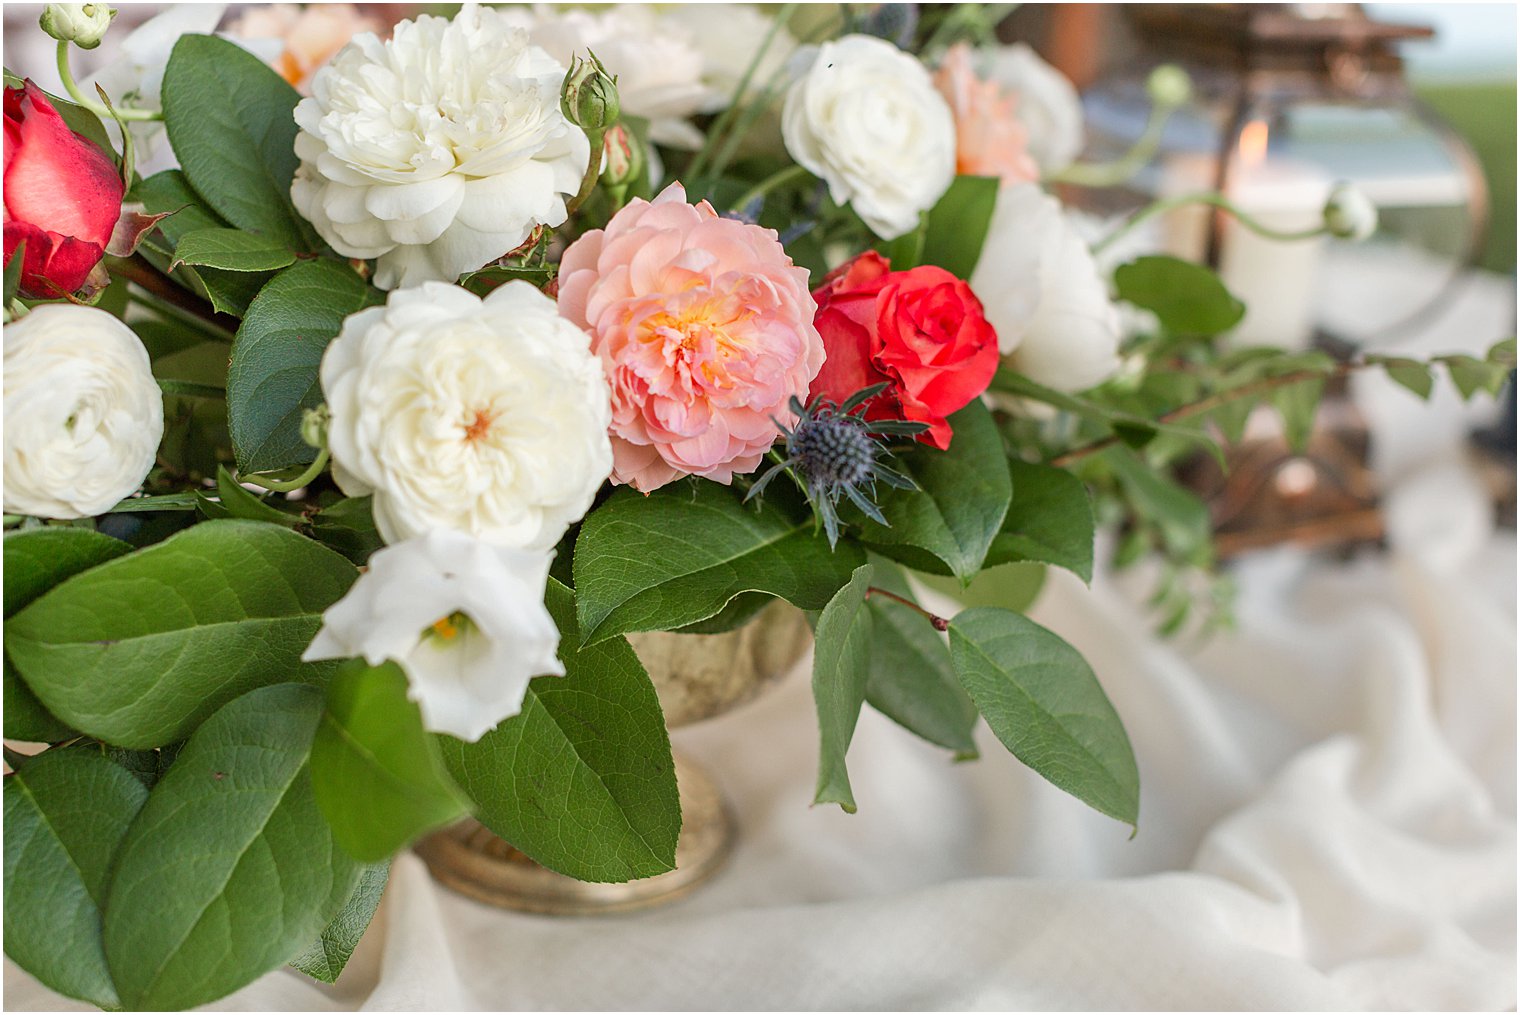 Floral arrangement at wedding editorial shoot